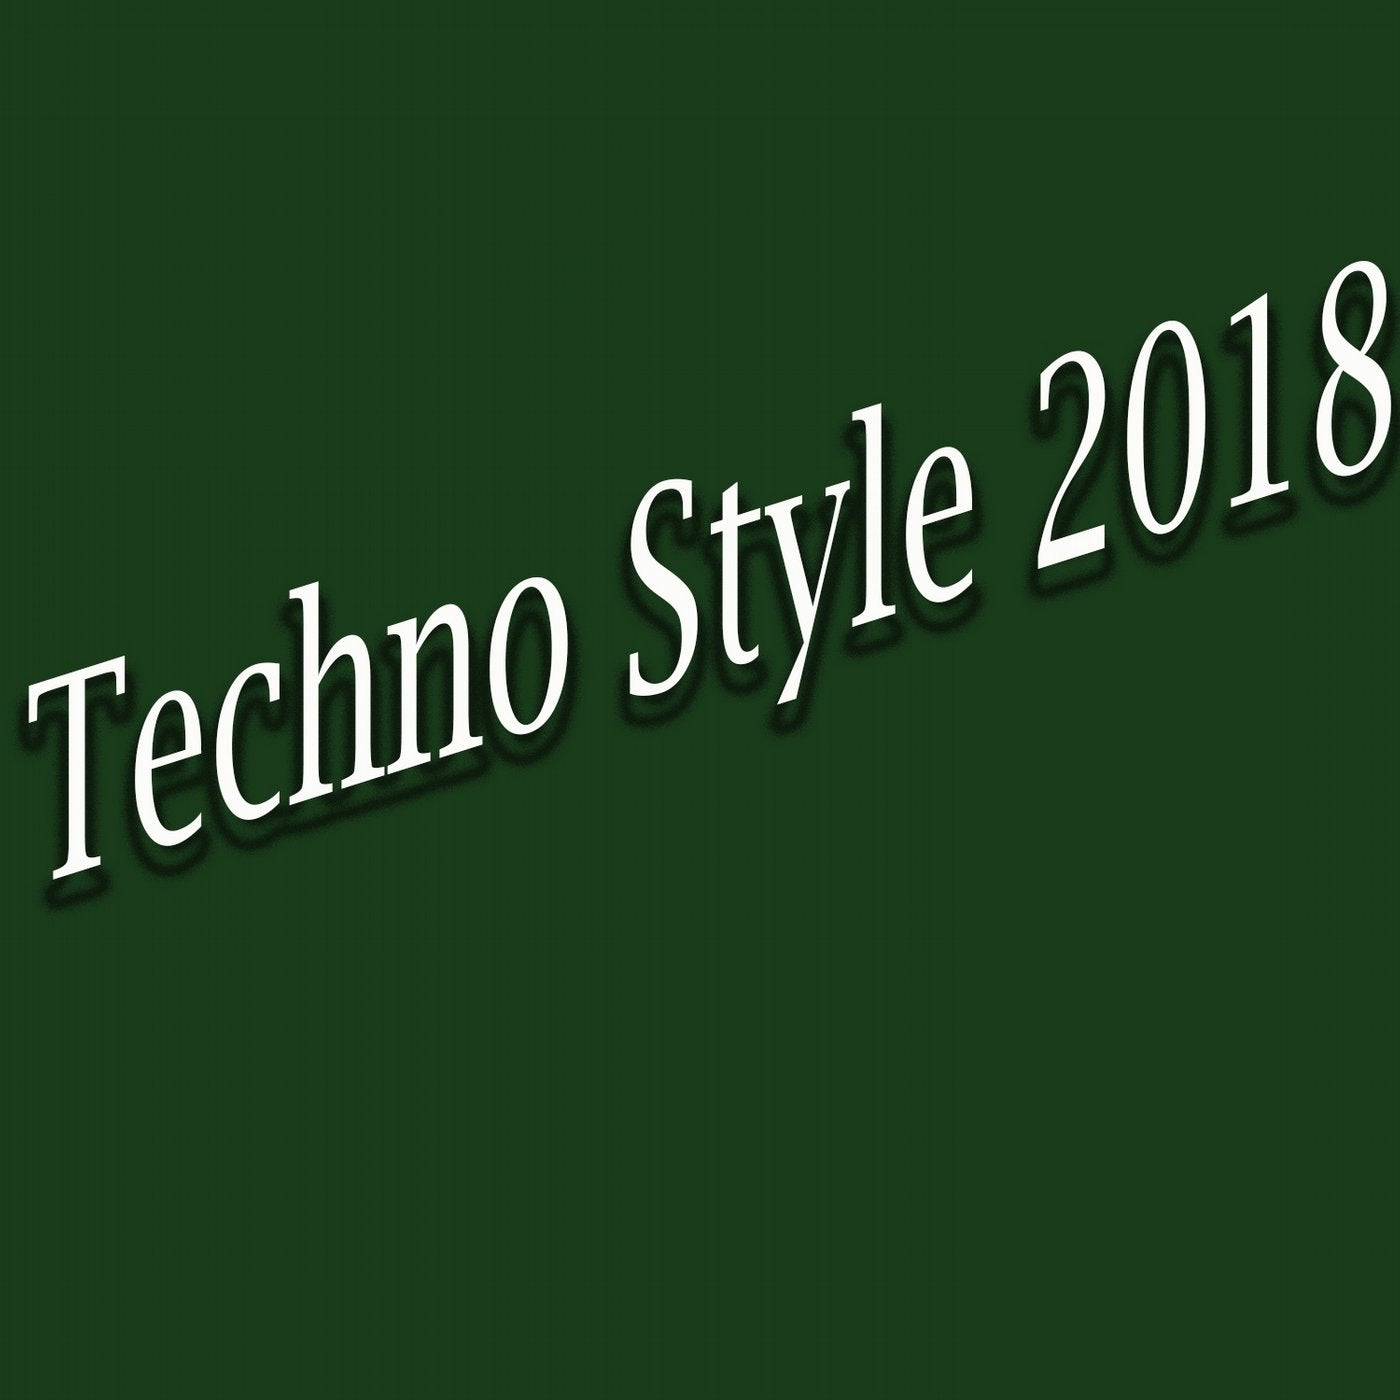 Techno Style 2018